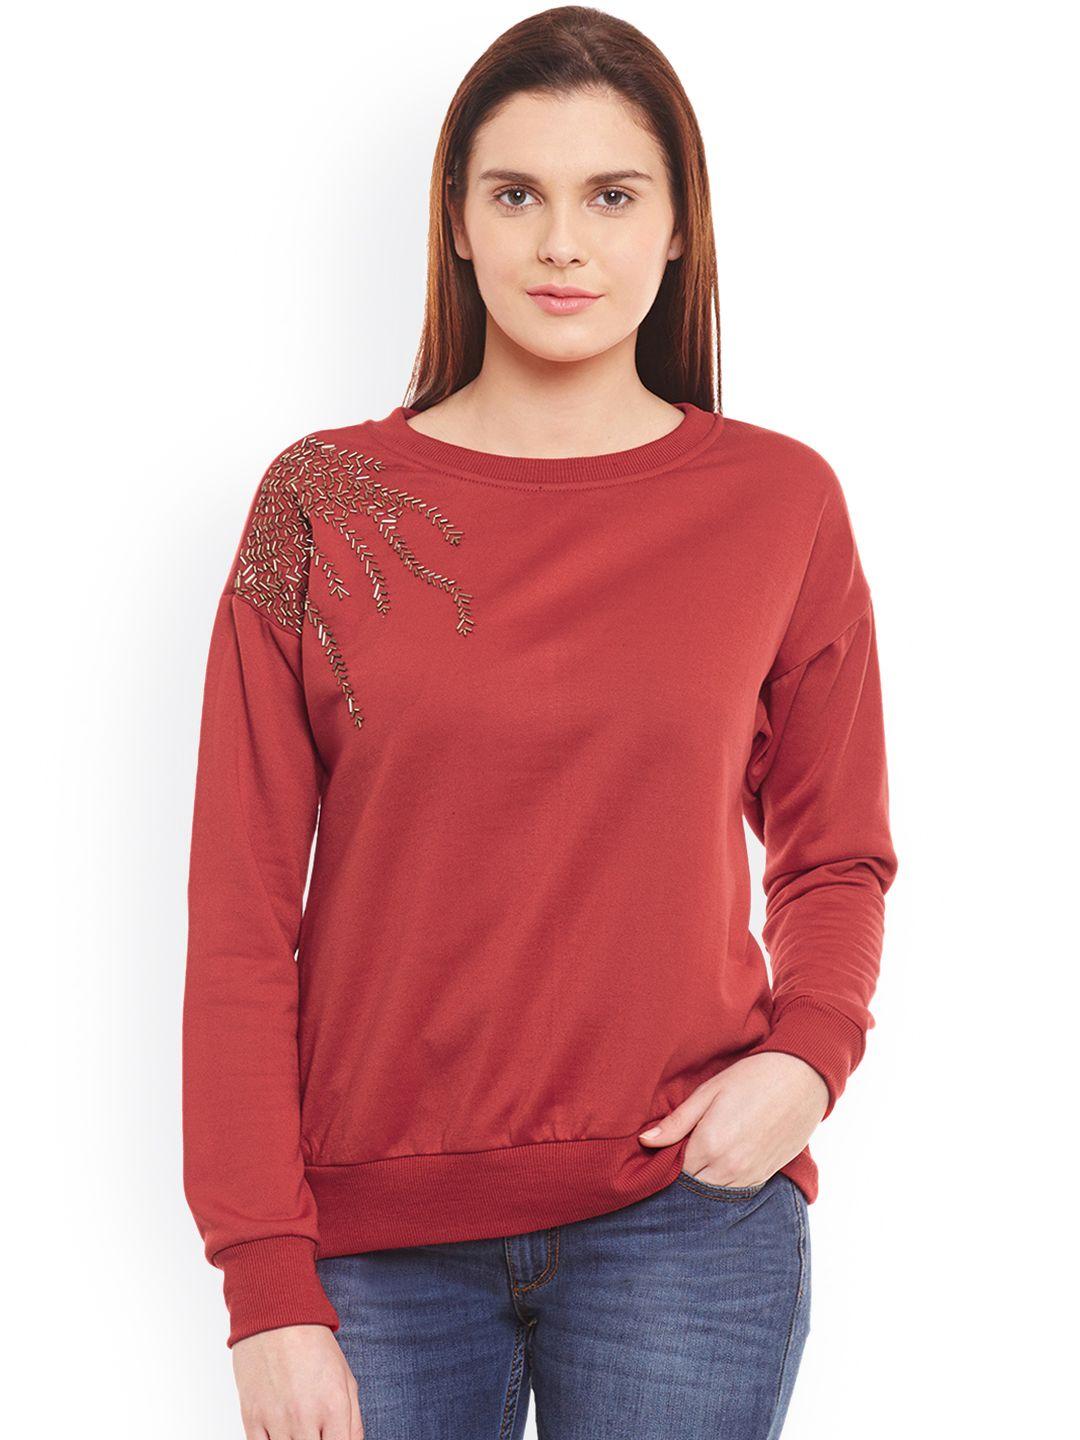 Belle Fille Red Sweatshirt with Embellished Detail